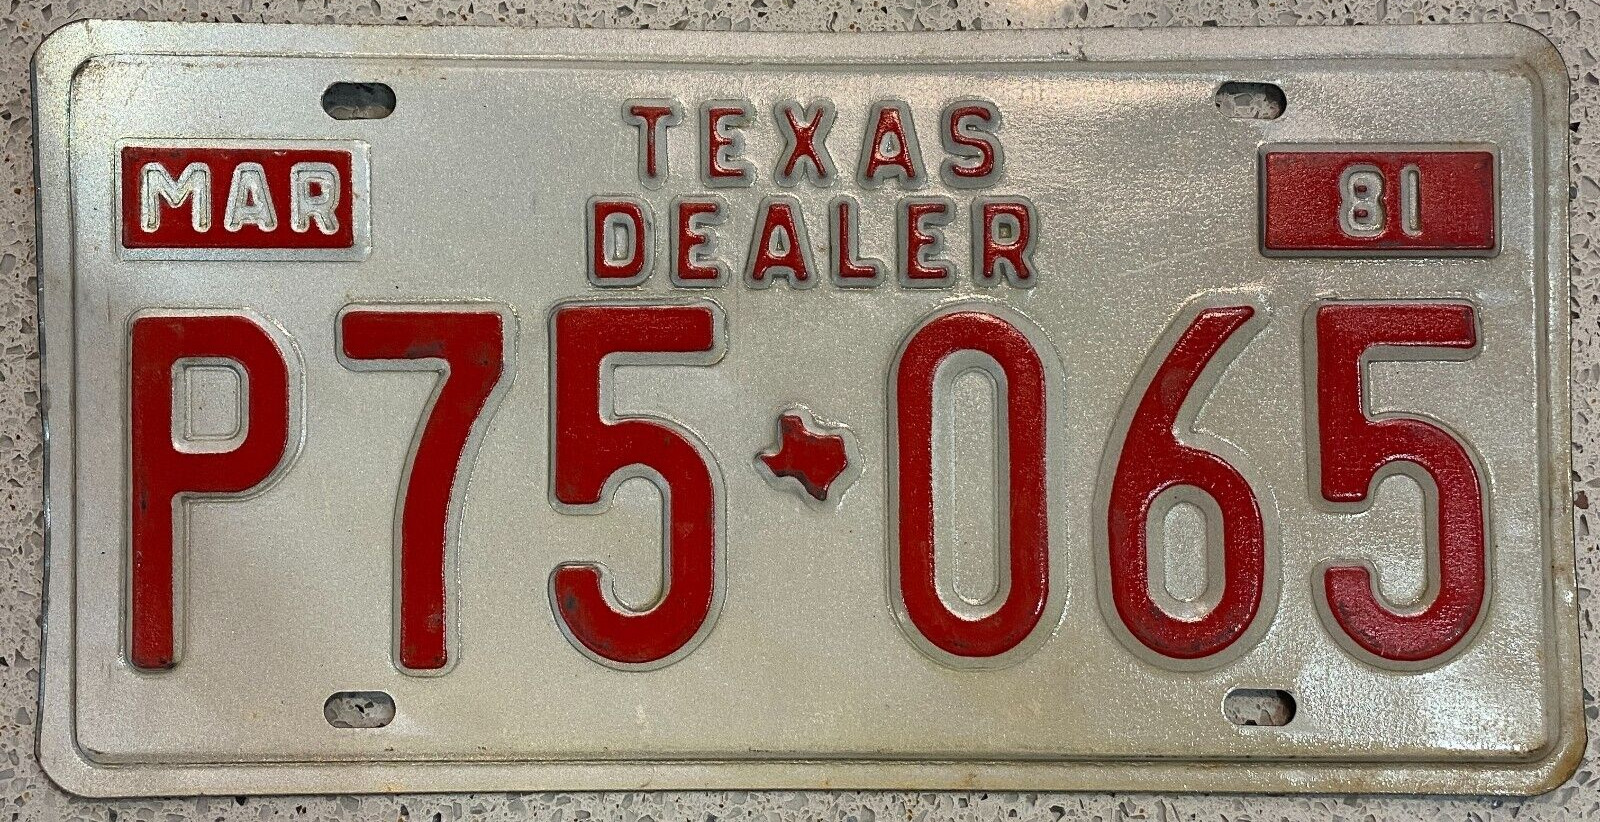 1981 Vintage Texas License Plate DEALER Red on White #P75-065